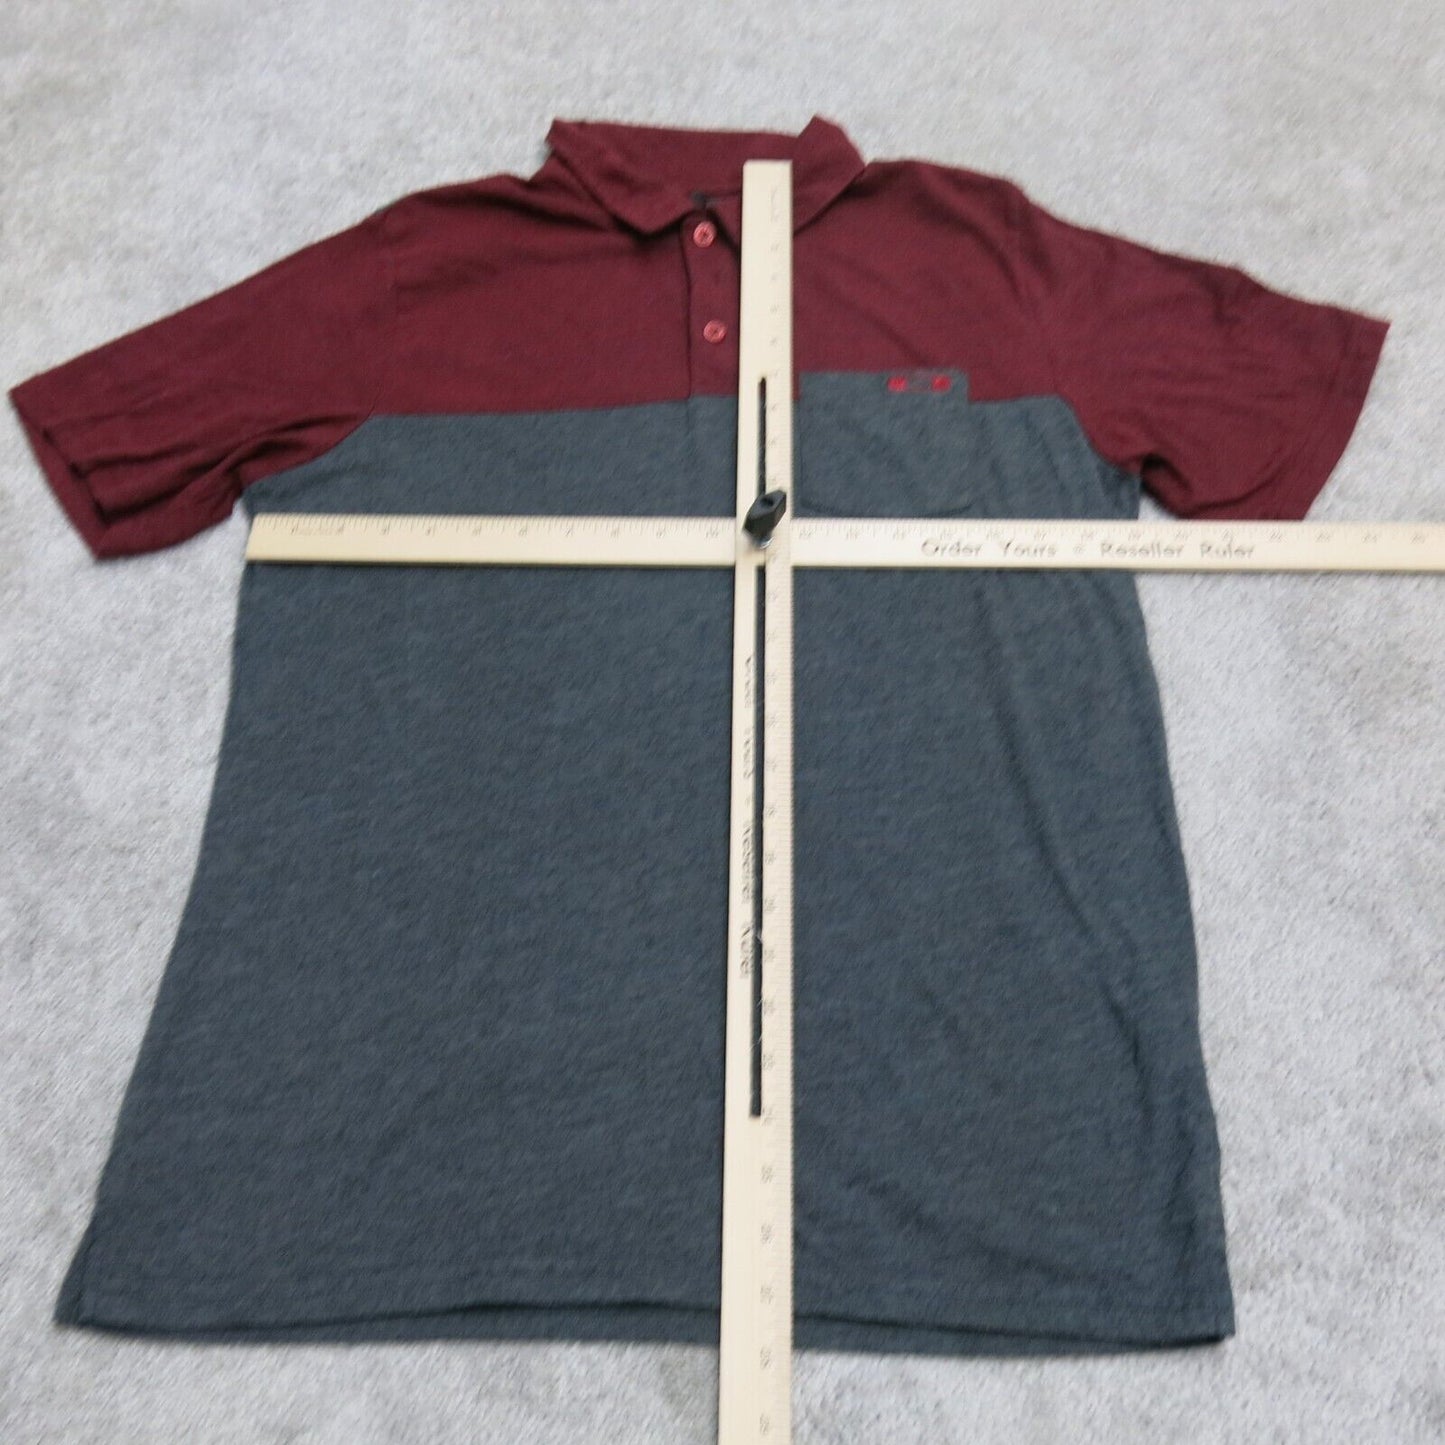 Vintage Men Casual Polo Shirt Short Sleeves Chest Pocket Logo Red Gray SZ Medium